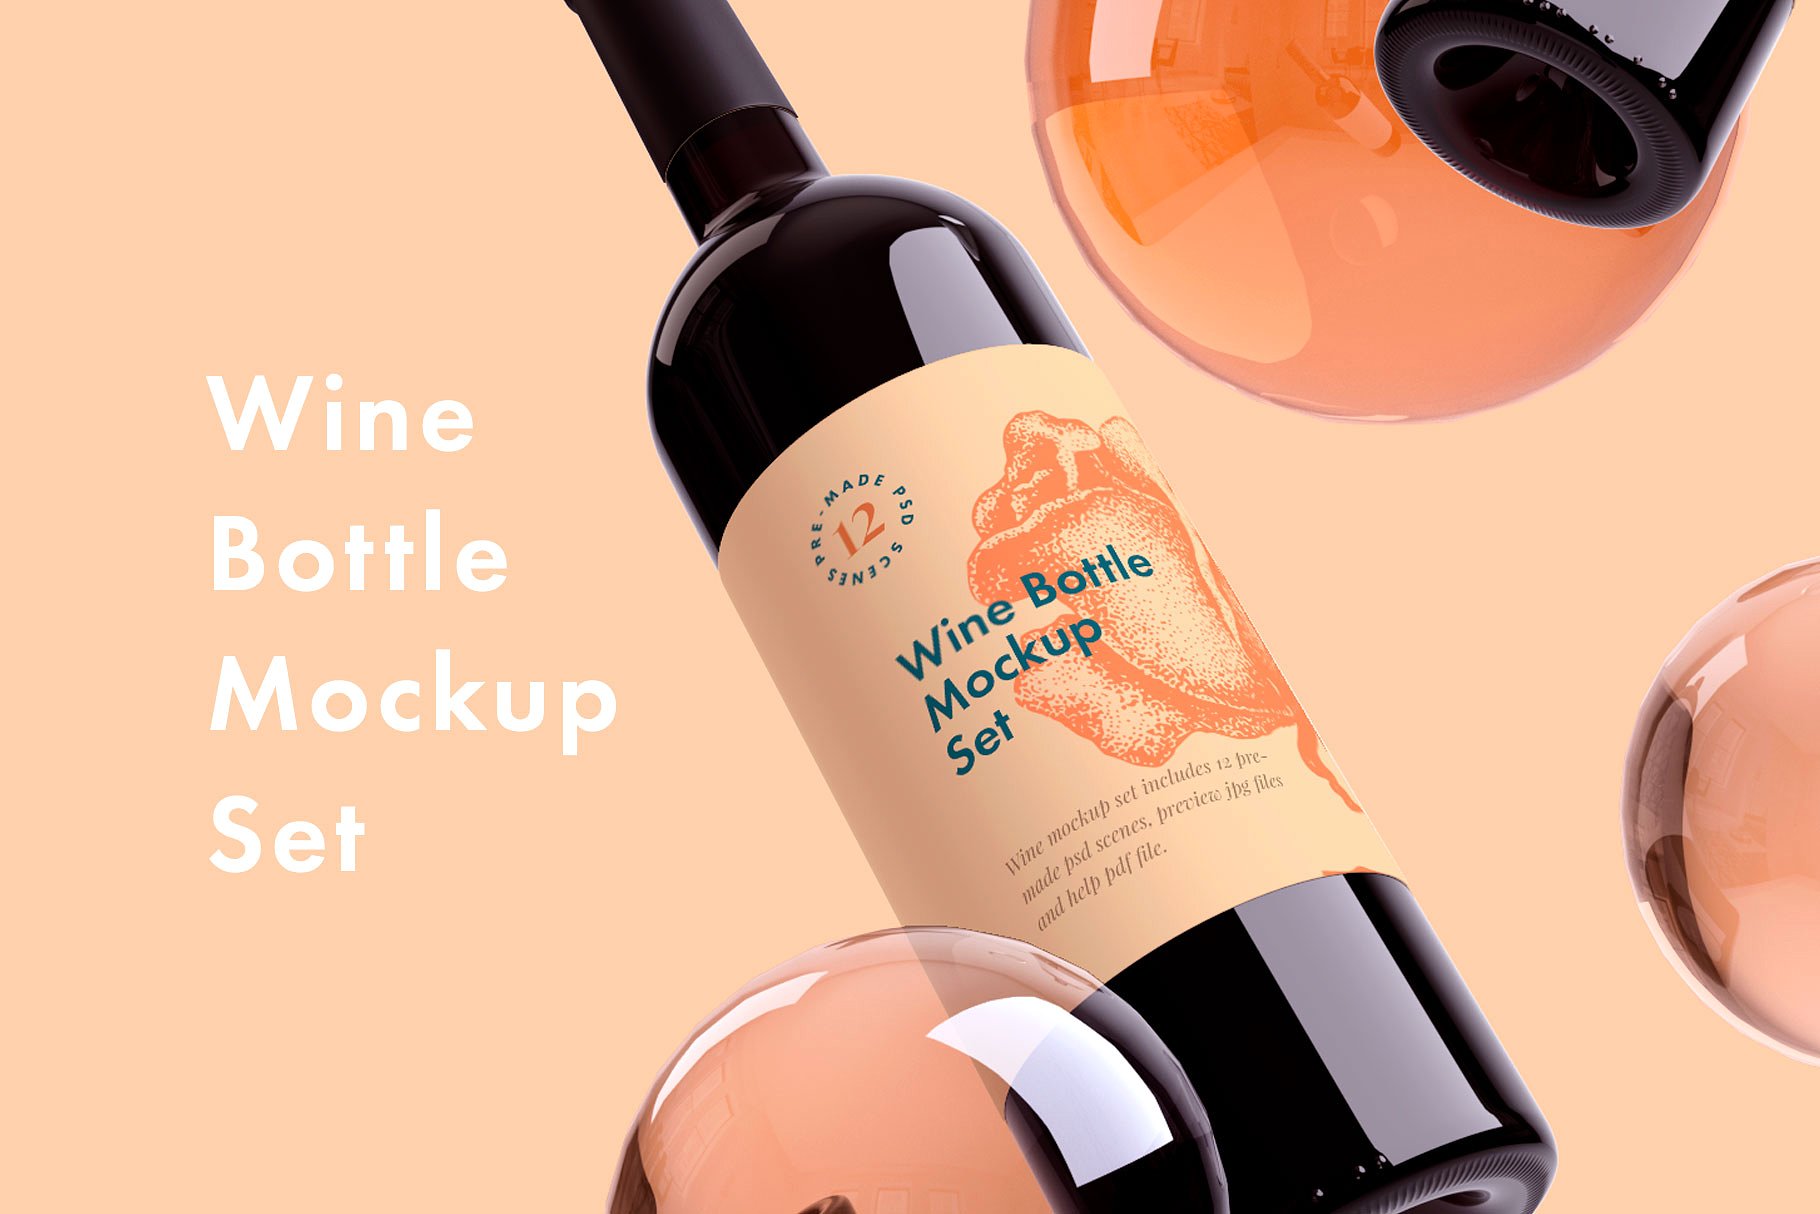 A wine bottle mockup set